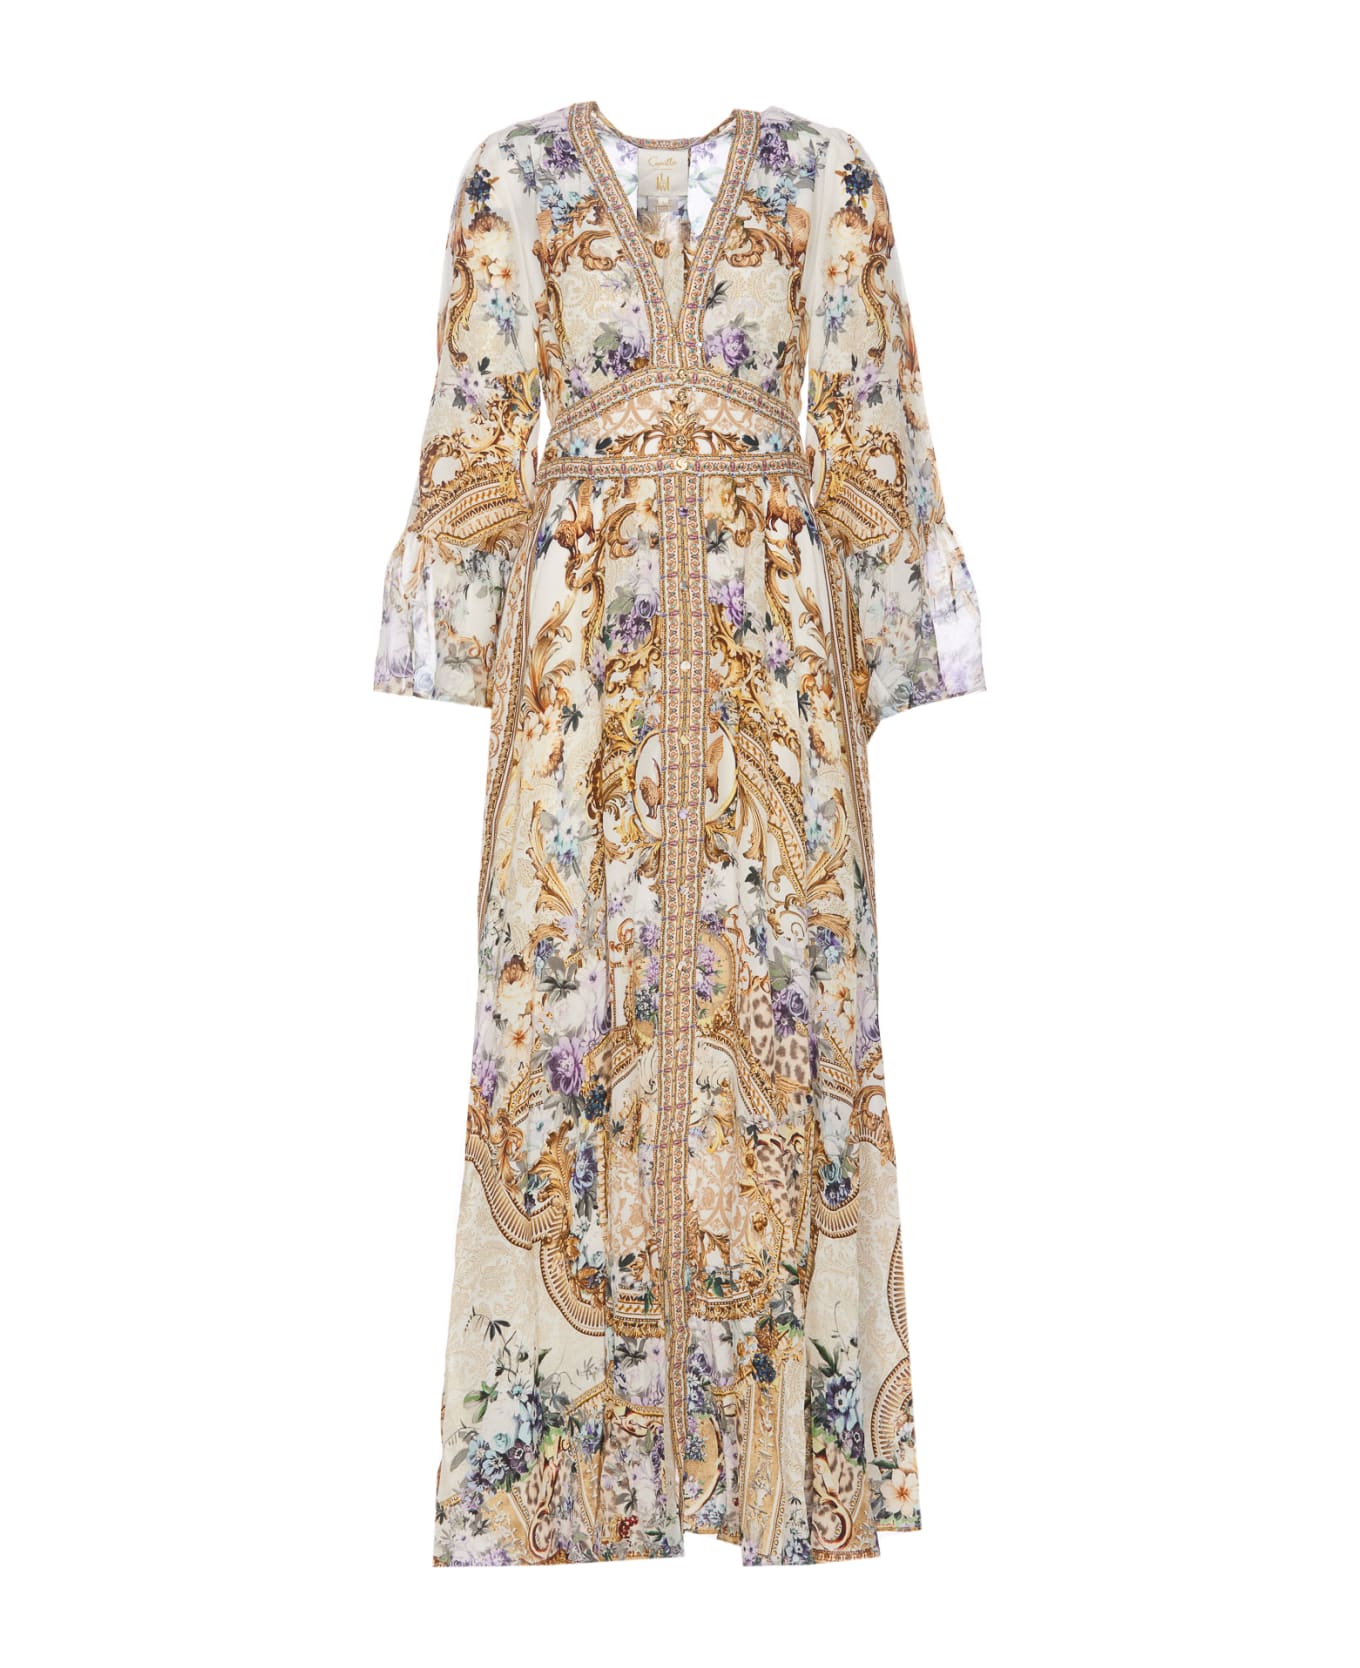 Camilla Shaped Waistband Dress With Ruffle Sleeve - MultiColour